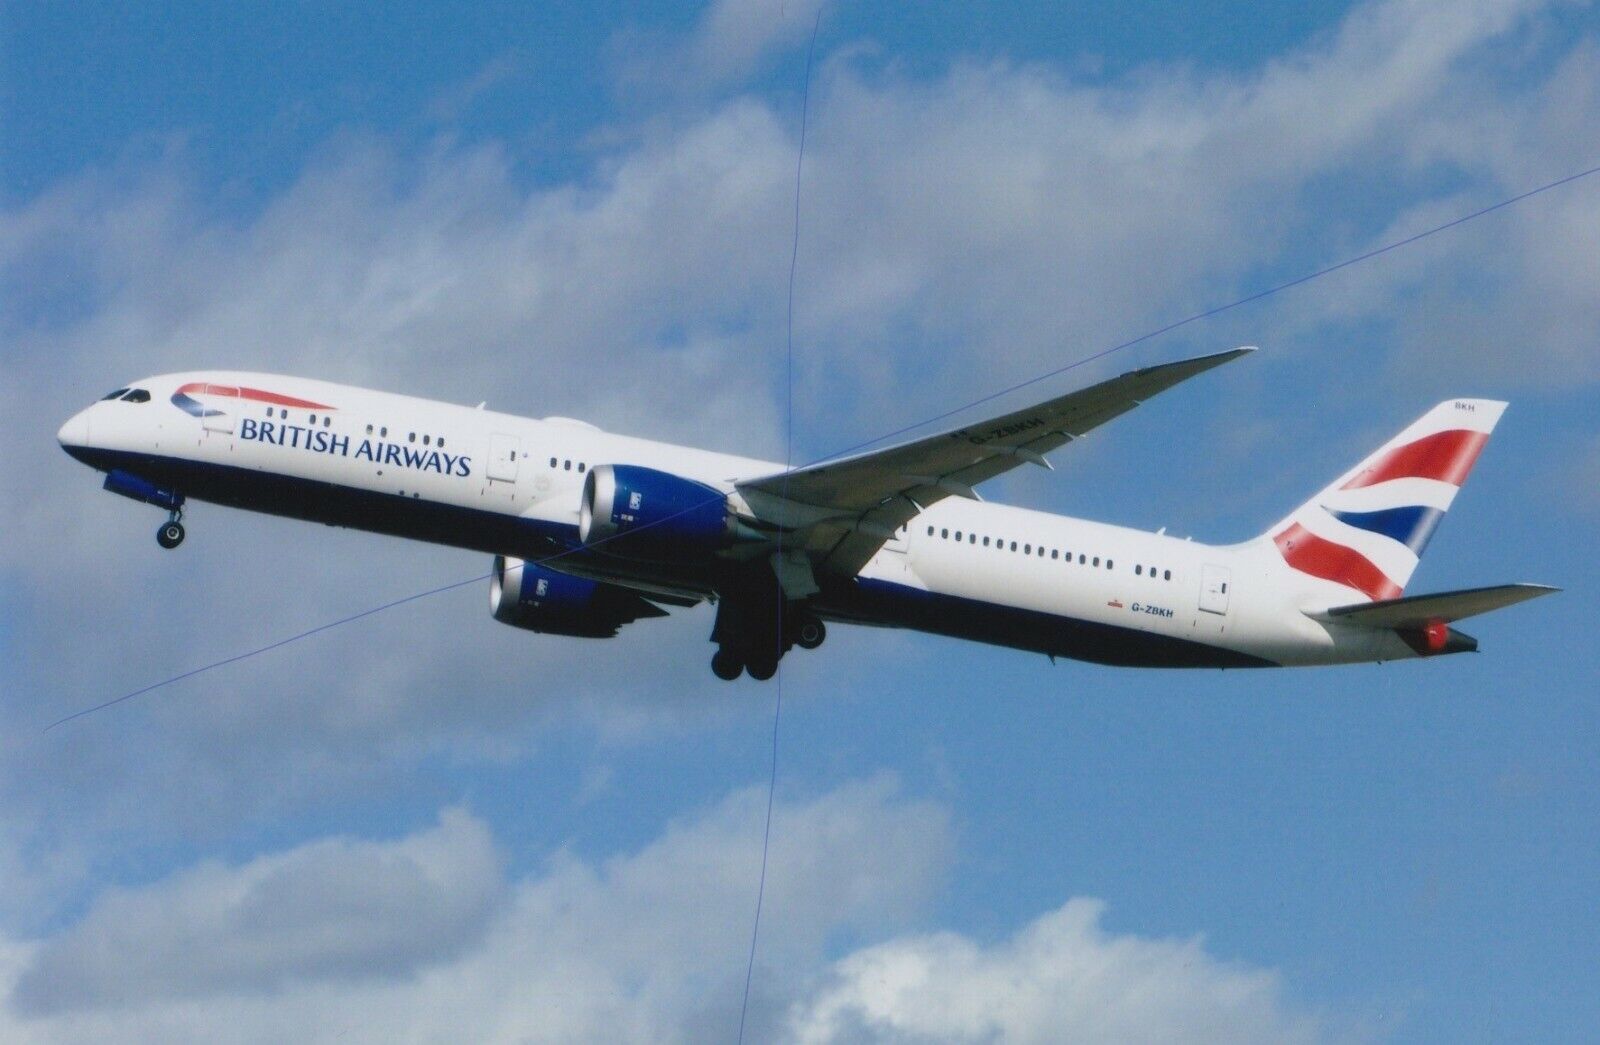 BRITISH AIRWAYS PLANE PHOTO BOEING 787 CIVIL AIRCRAFT PHOTOGRAPH PICTURE G-ZBKH.